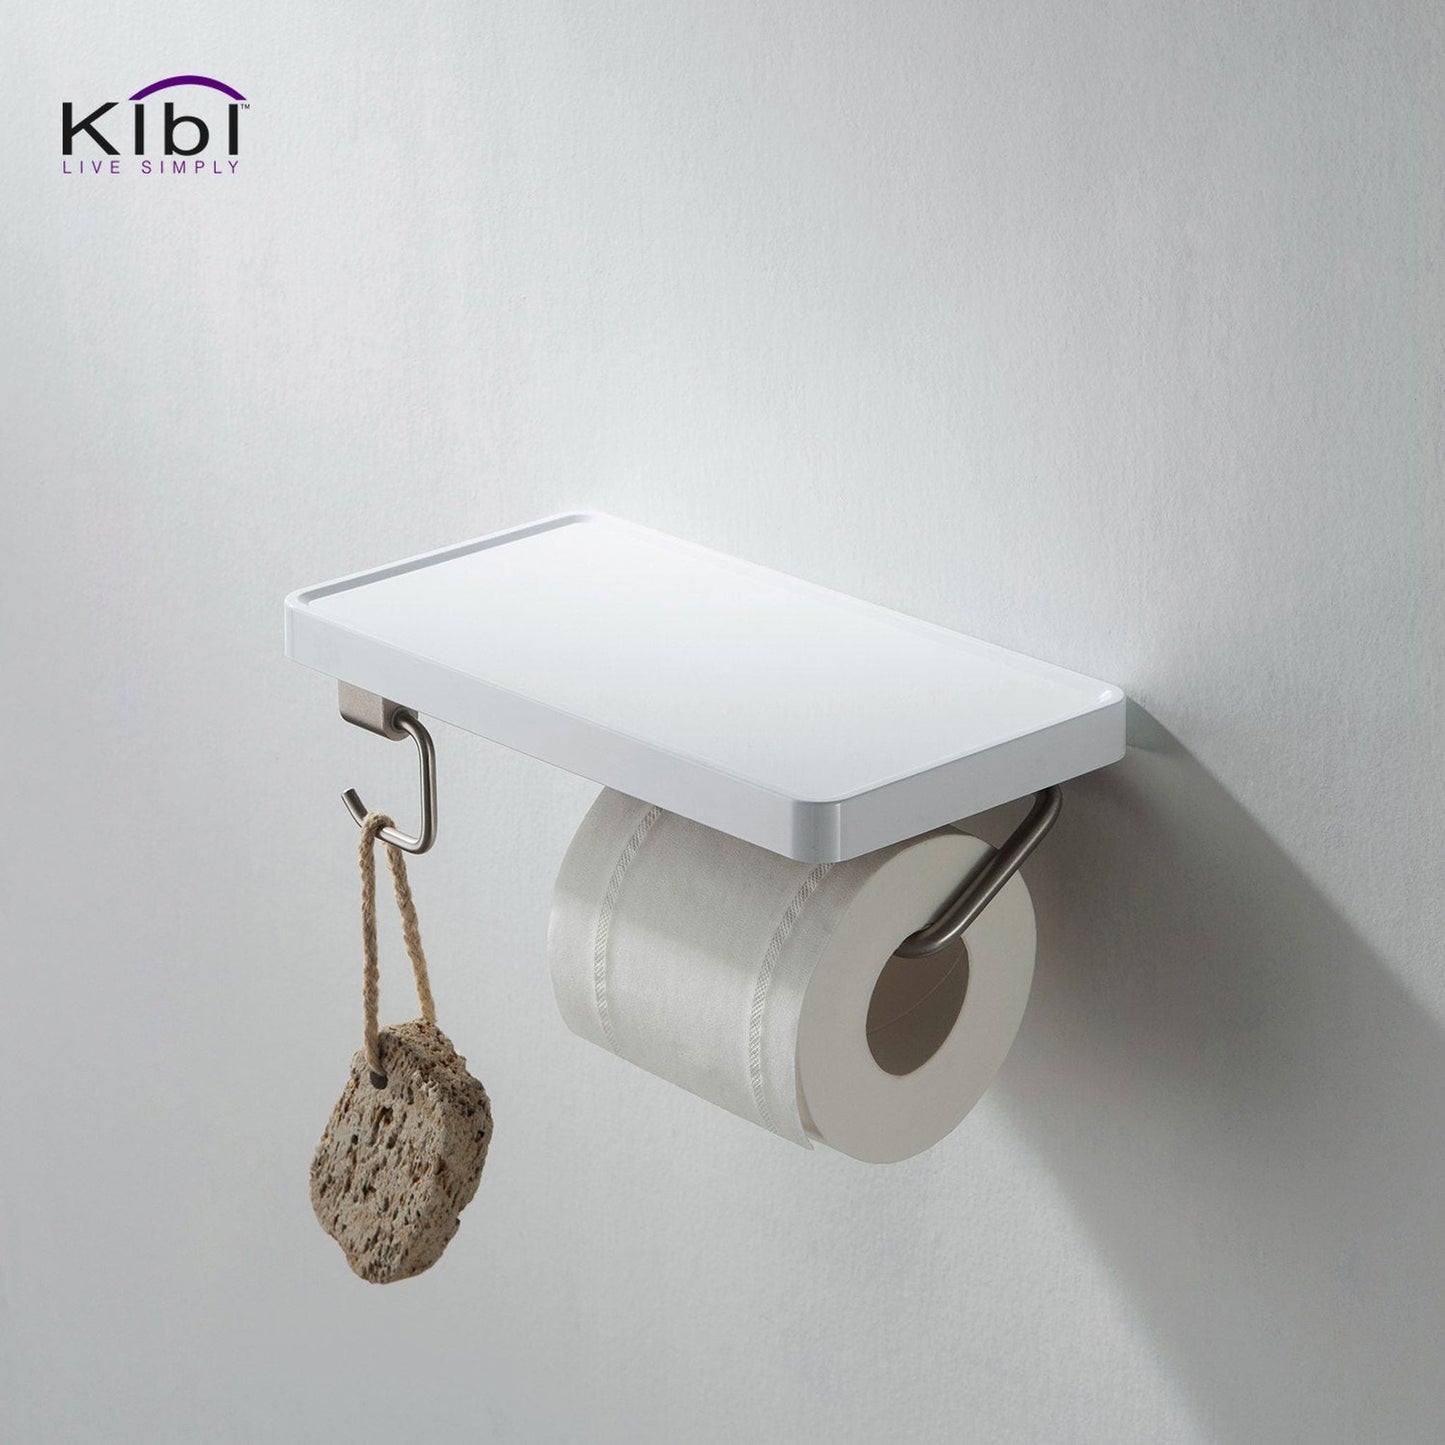 KIBI Deco Bathroom Tissue Holder With Shelf and Hook in Brushed Nickel Finish